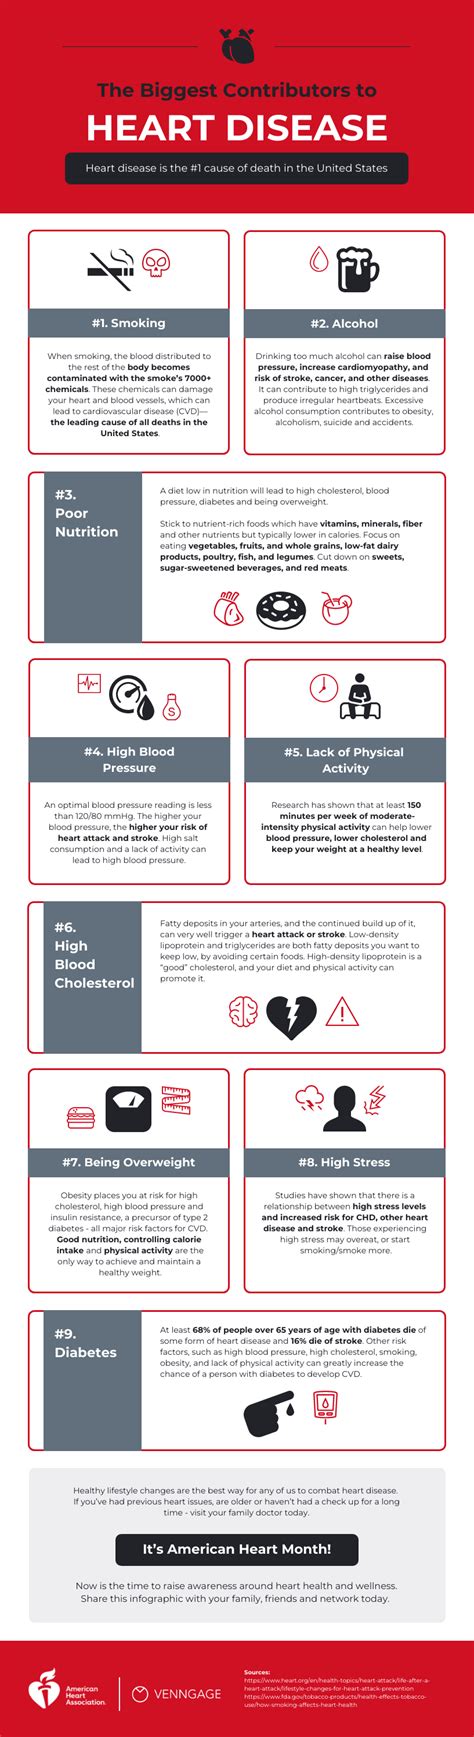 Heart Disease Risk Factors Infographic Venngage